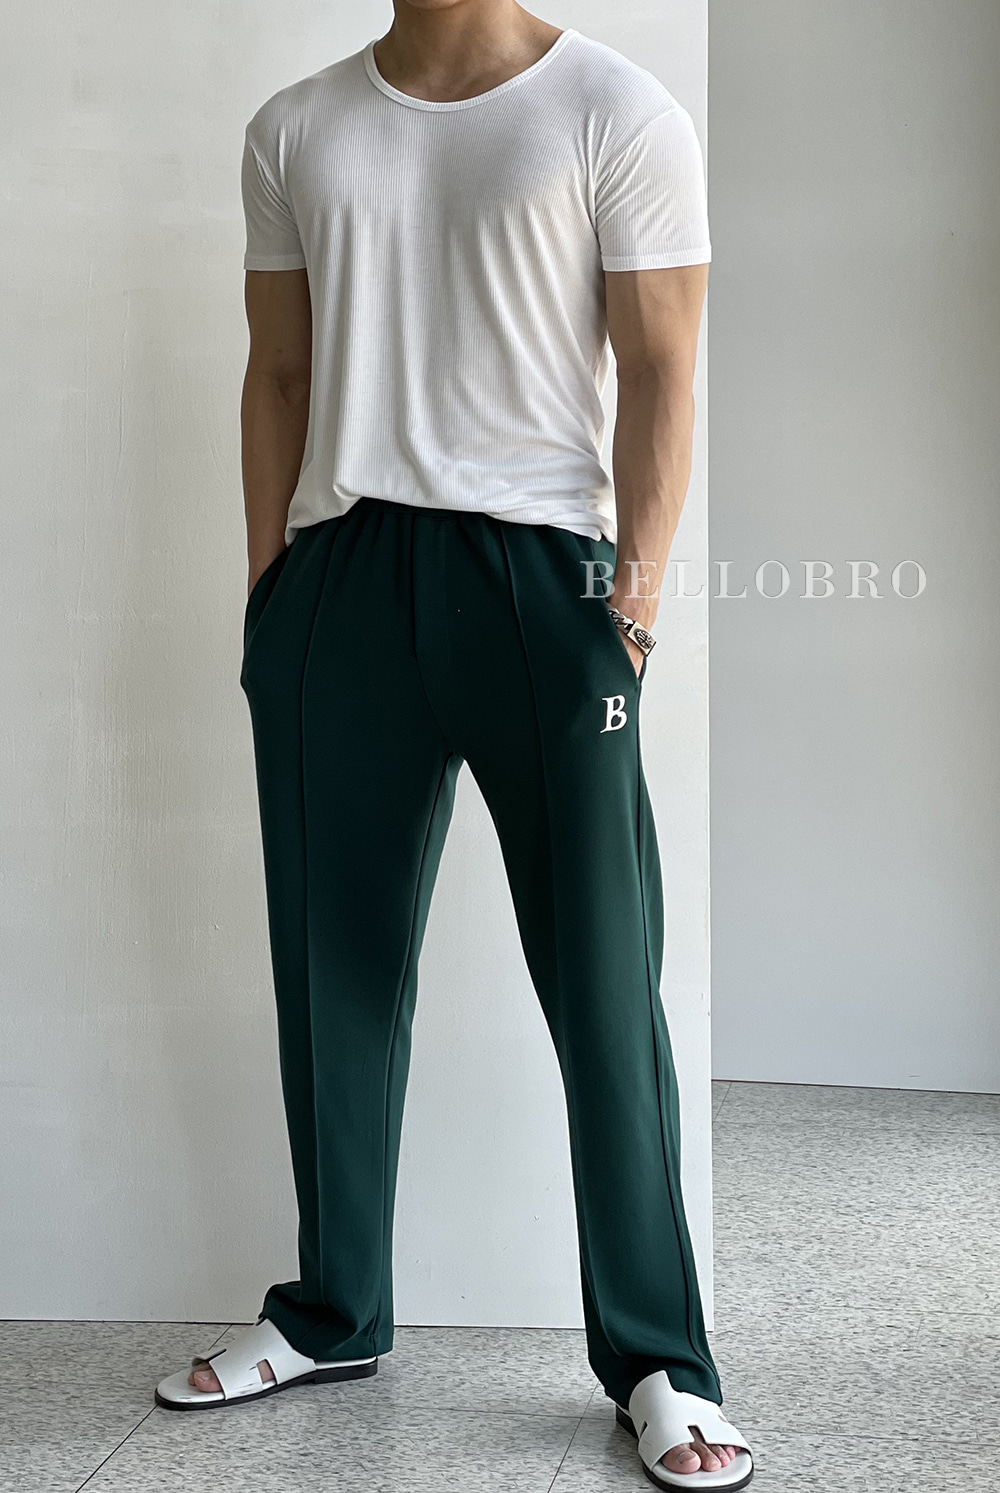 Bellobro soft line pants (01)